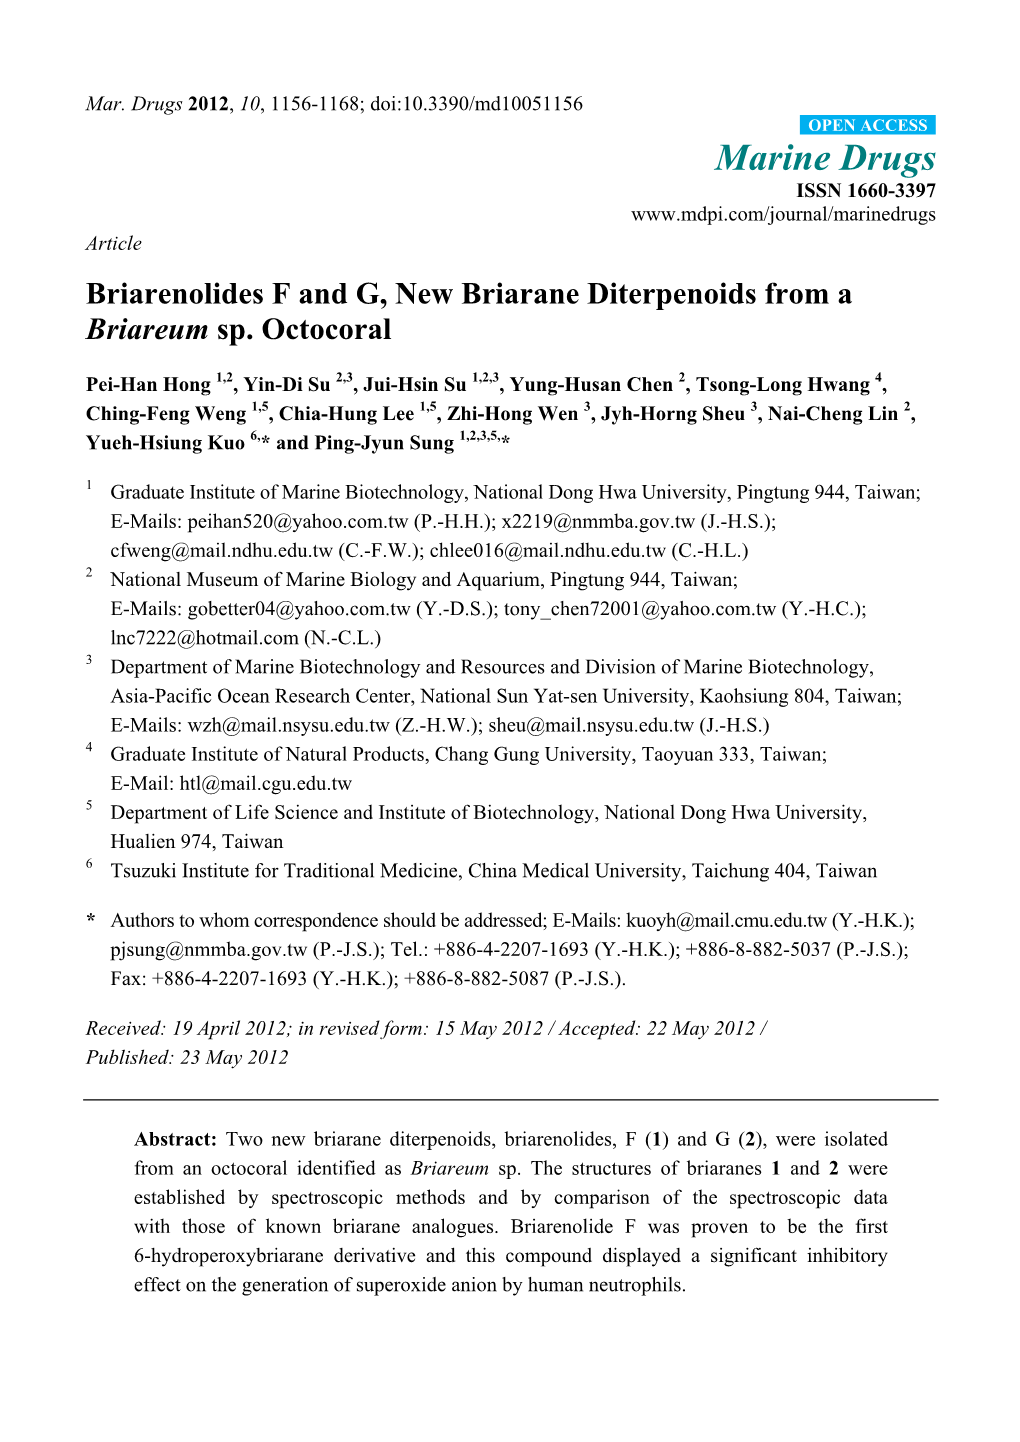 Briarenolides F and G, New Briarane Diterpenoids from a Briareum Sp